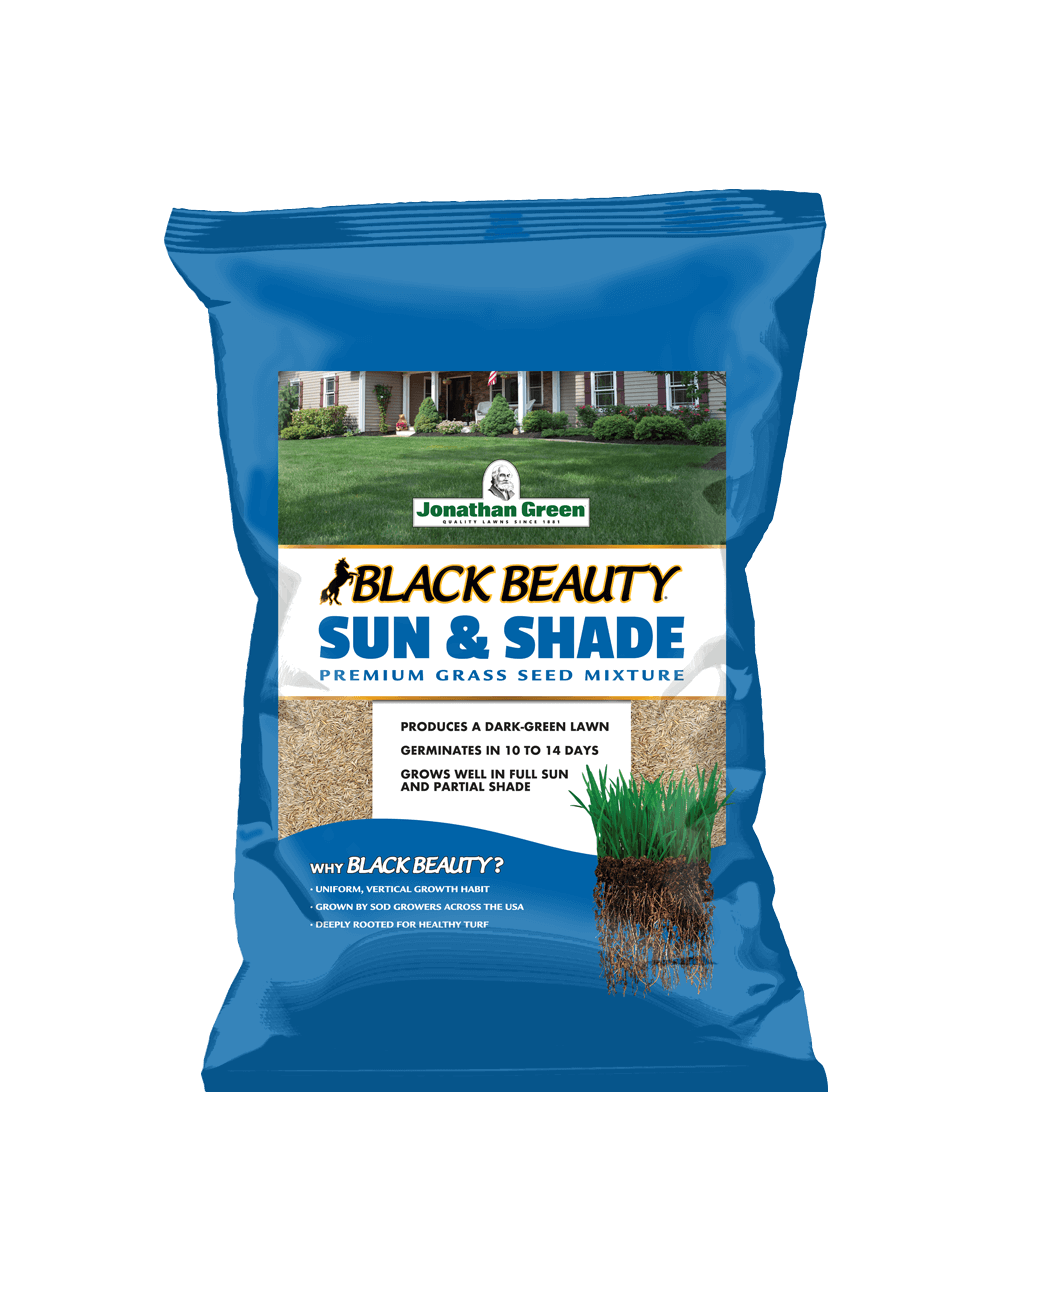 Black Beauty® Sun & Shade Grass Seed, 3lb.